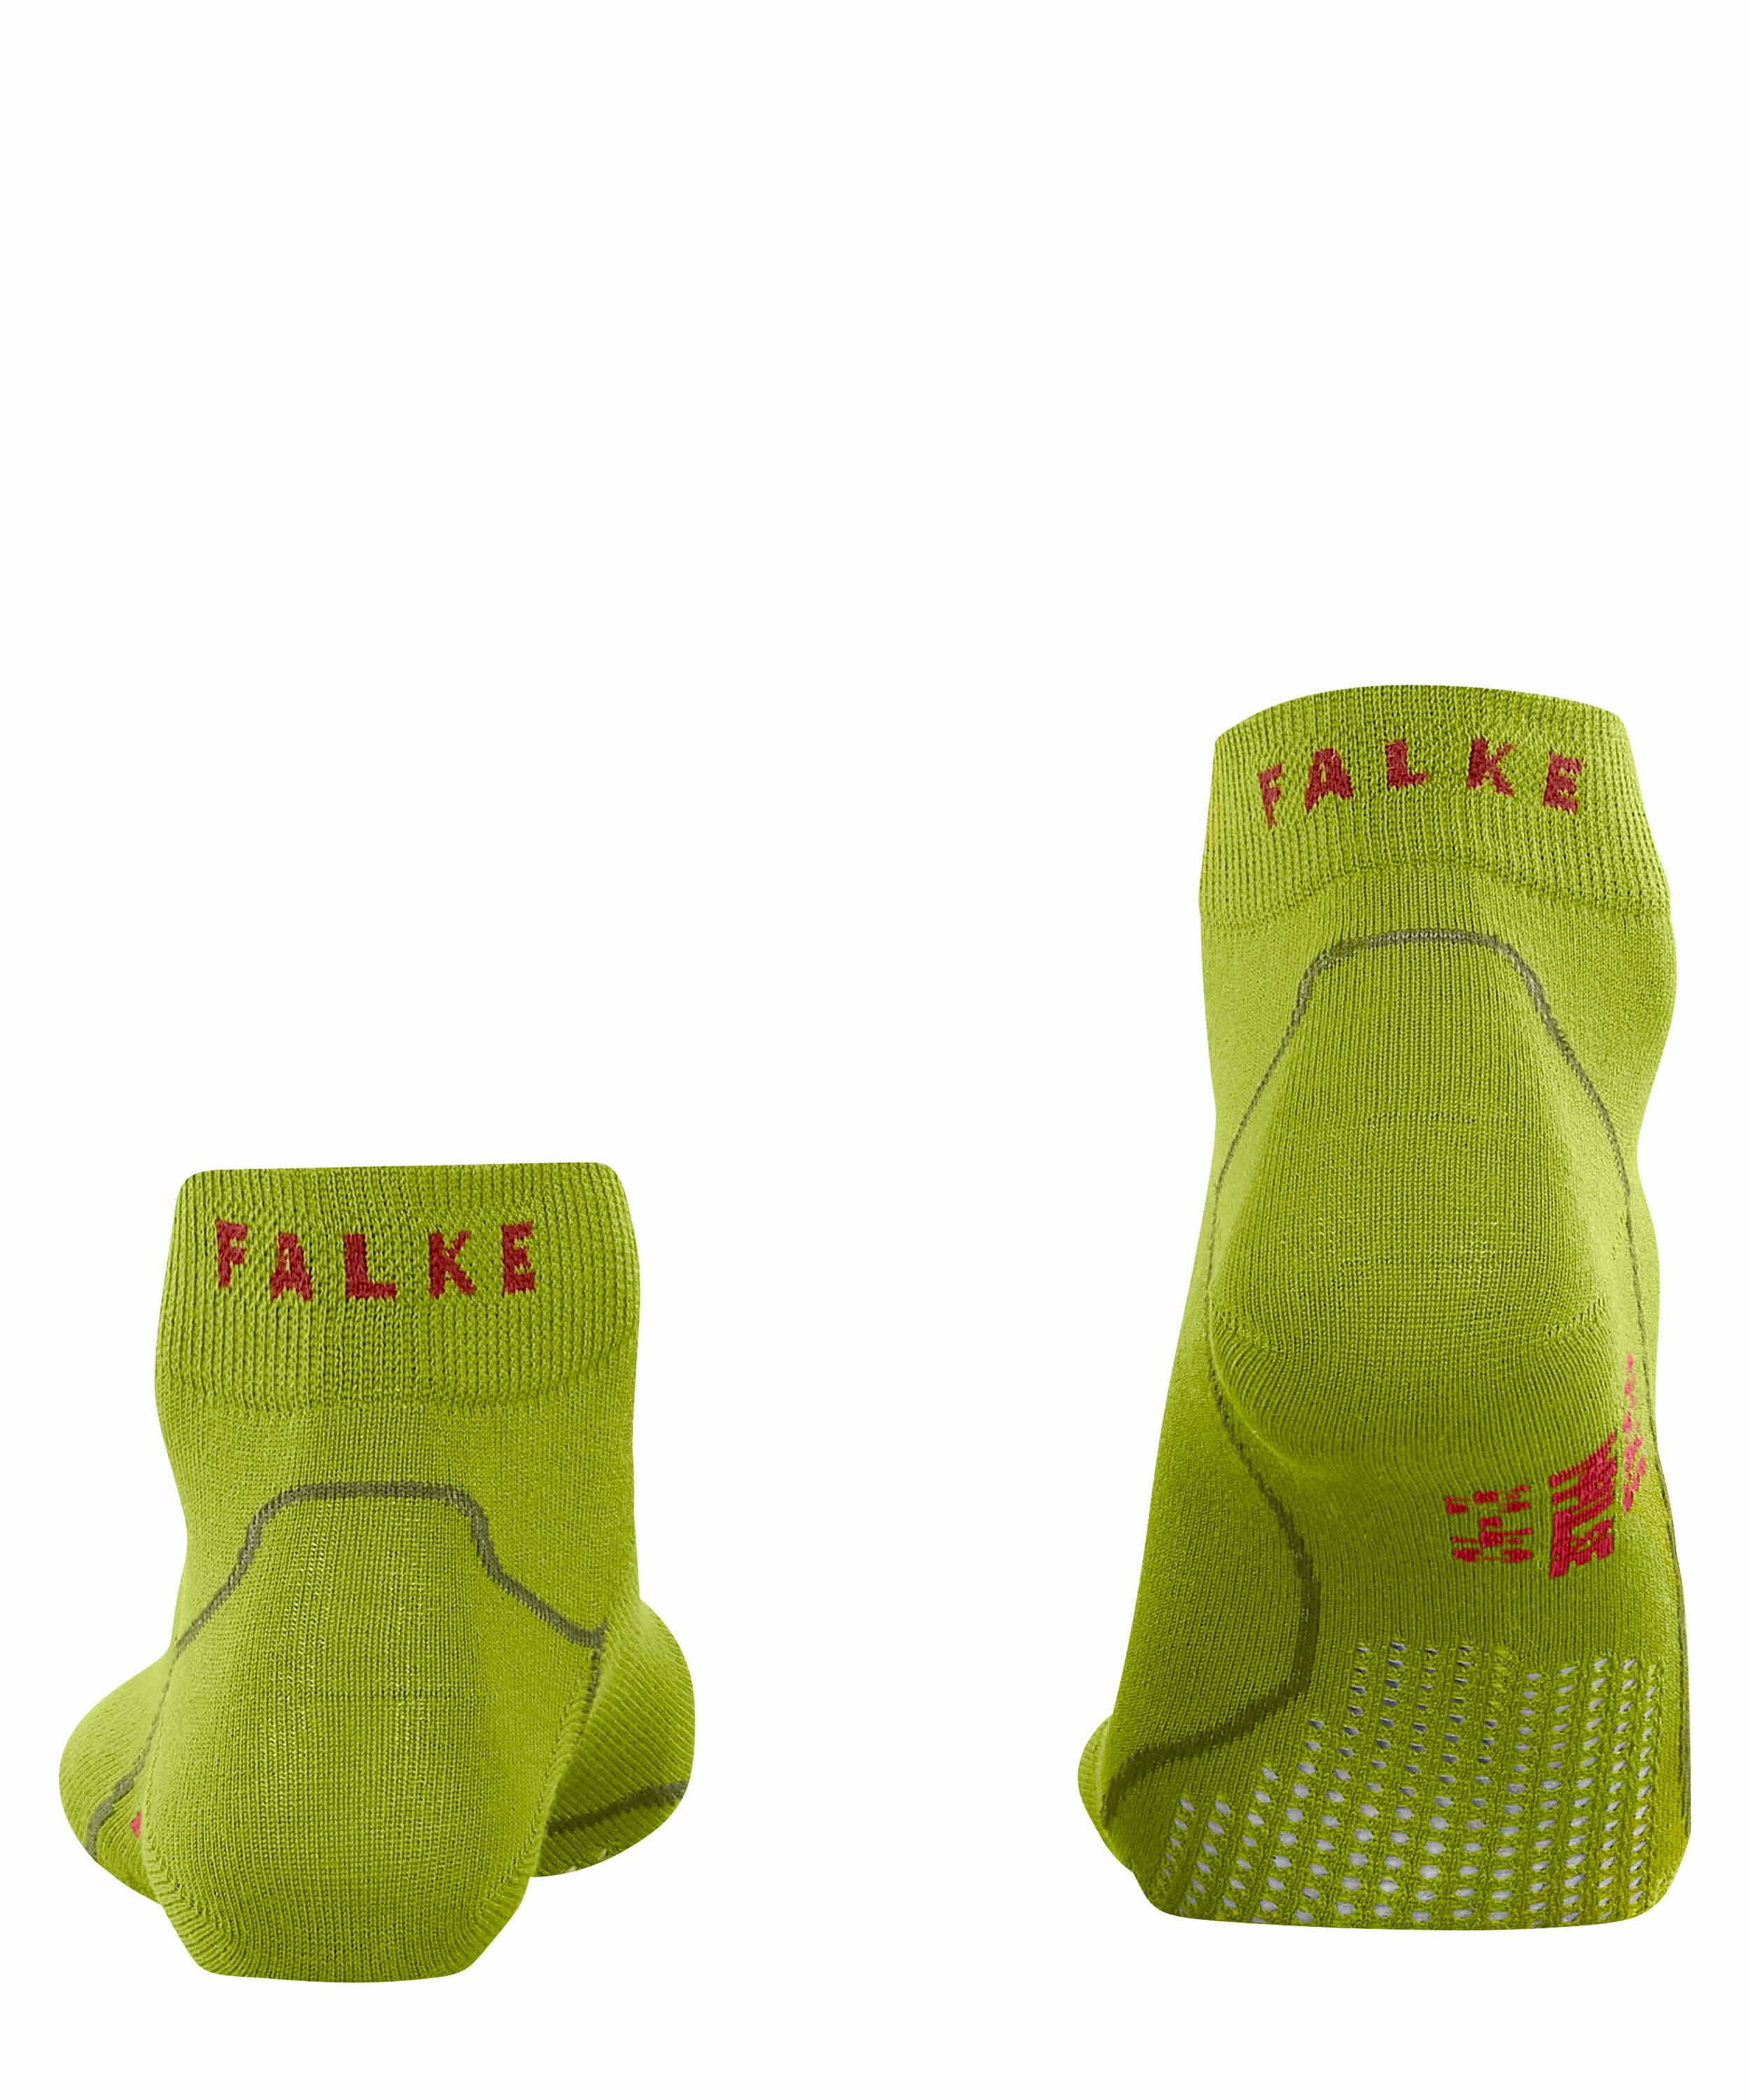 FALKE Impulse Air Herren Socken, 44-45, Gelb, 16068-760104 günstig online kaufen